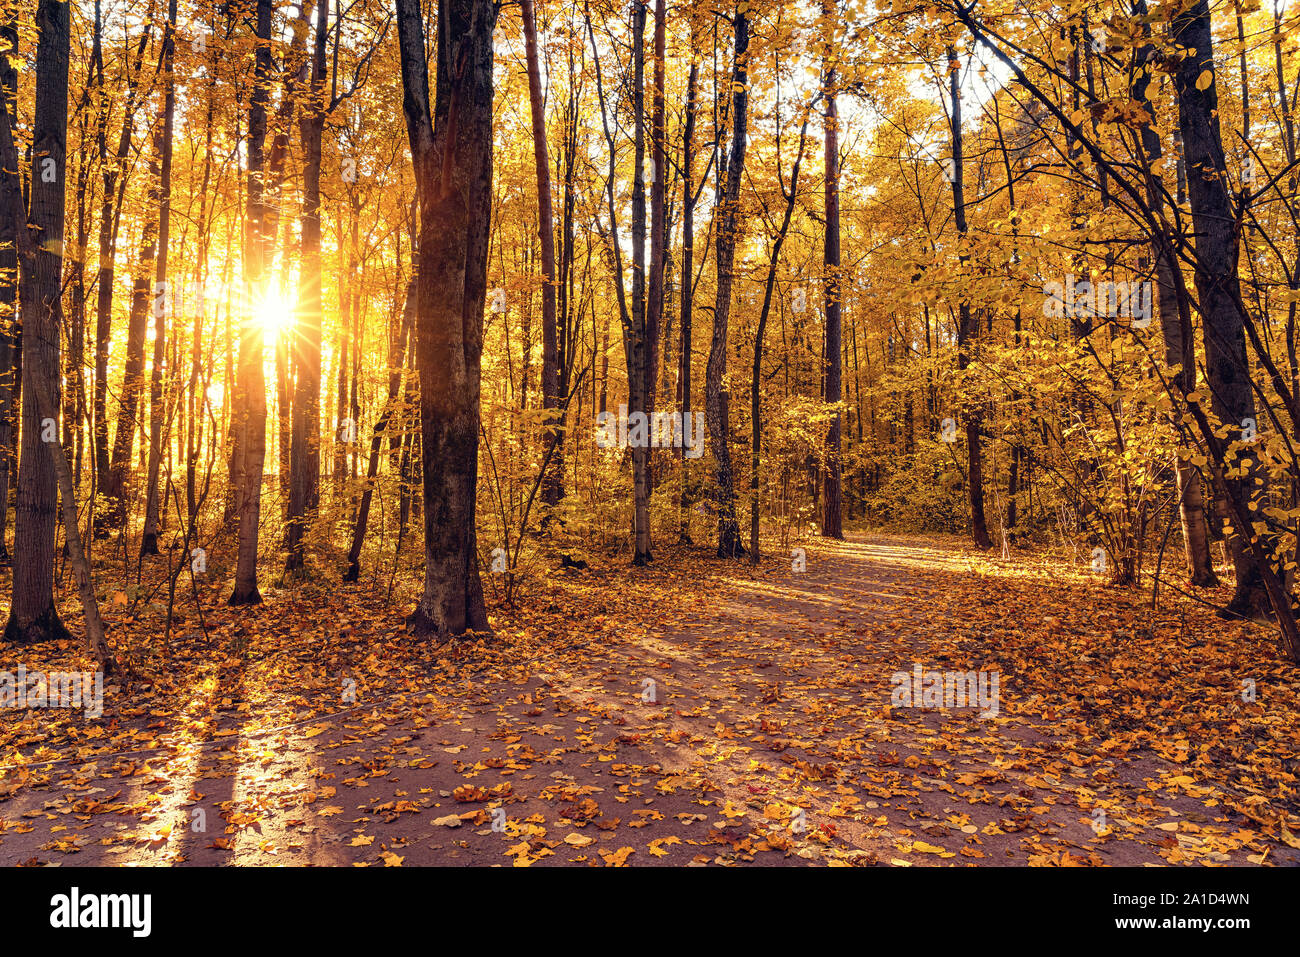 Bright trees in sunny autumn park Stock Photo